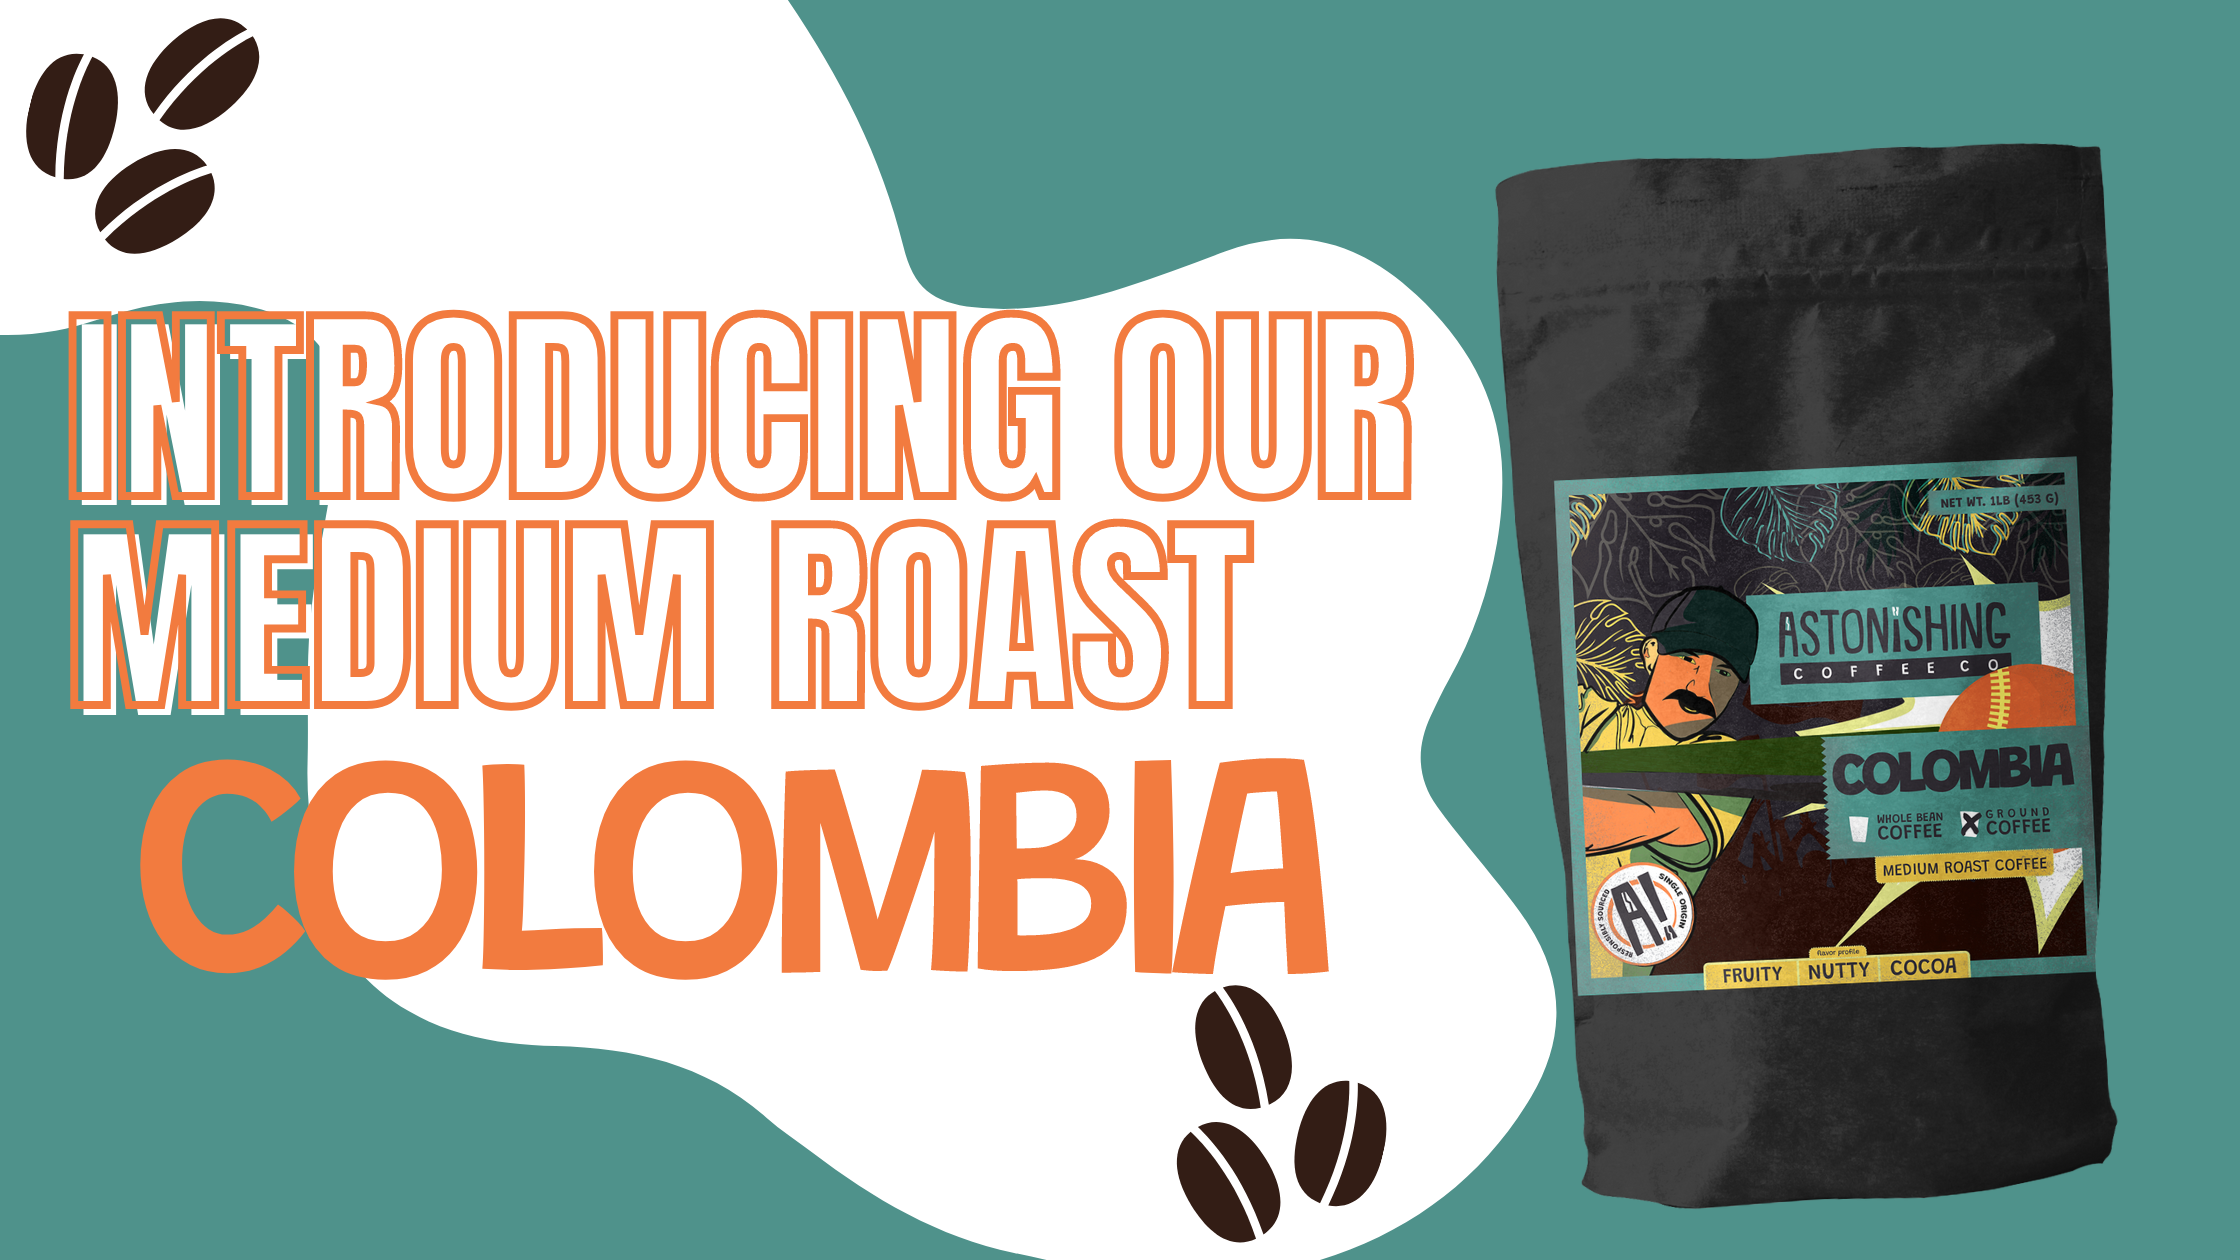 Introducing Astonishing Coffee’s Medium Roast: Colombia Coffee